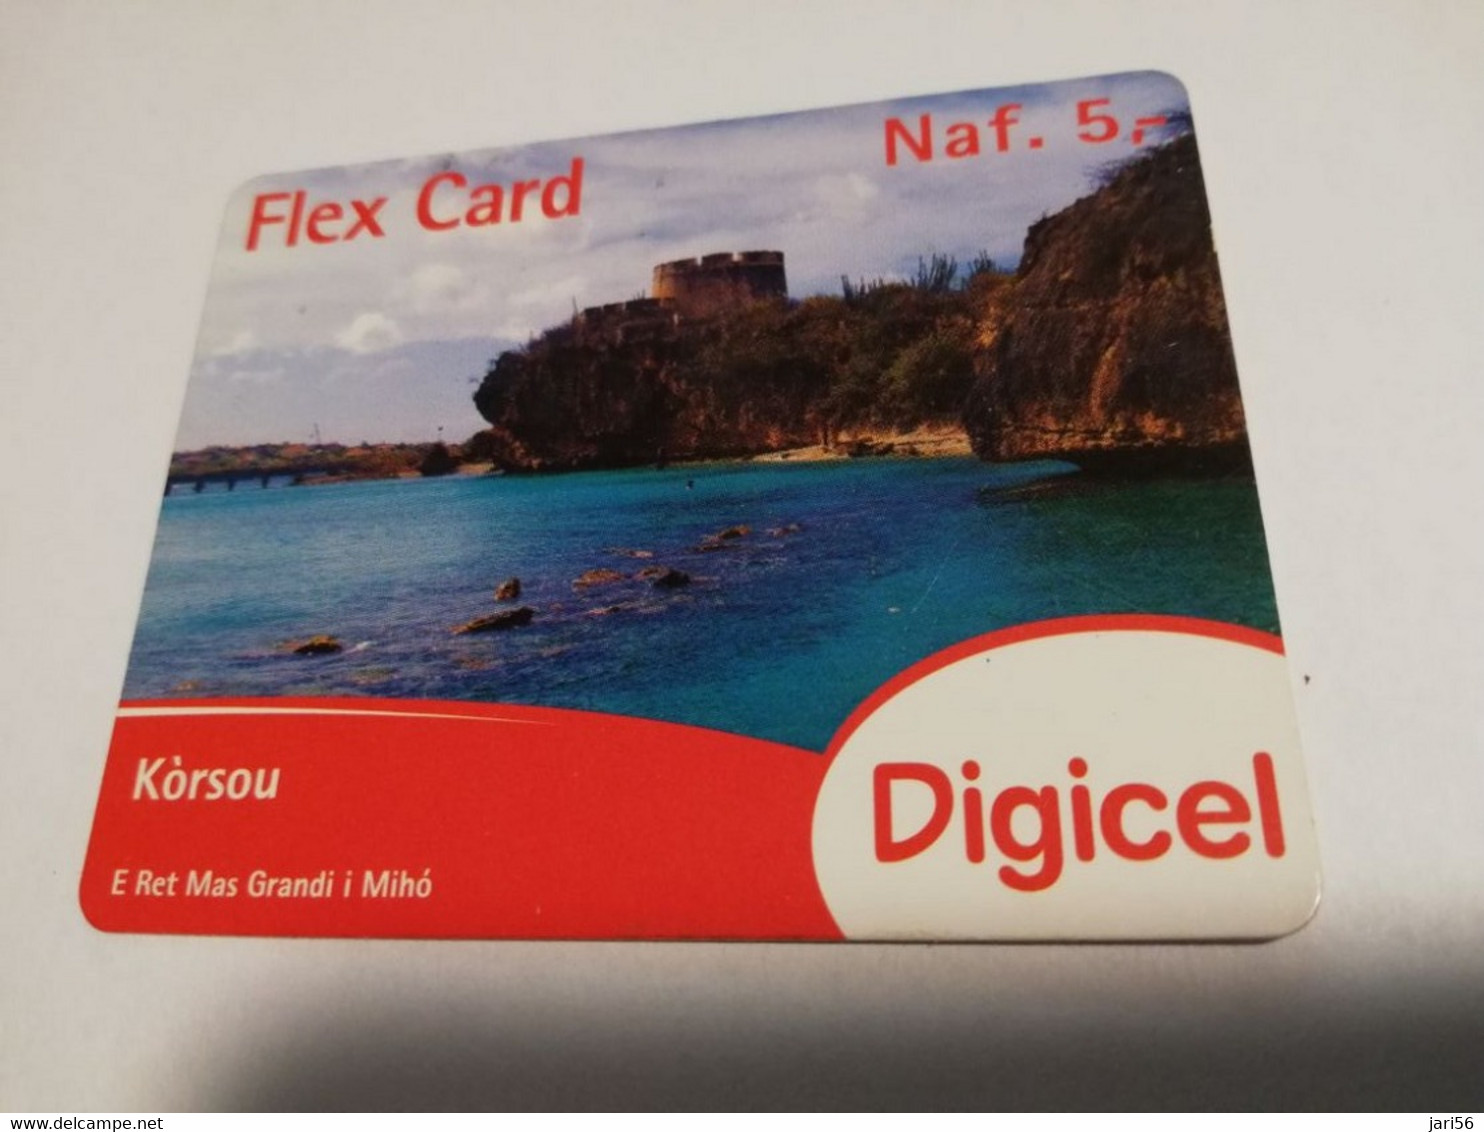 CURACAO NAF 5,- DIGICEL FLEX CARD  SEA SIGHT   CURACAO  (ROUND CORNERS)   16/12/2014   ** 4266** - Antilles (Netherlands)